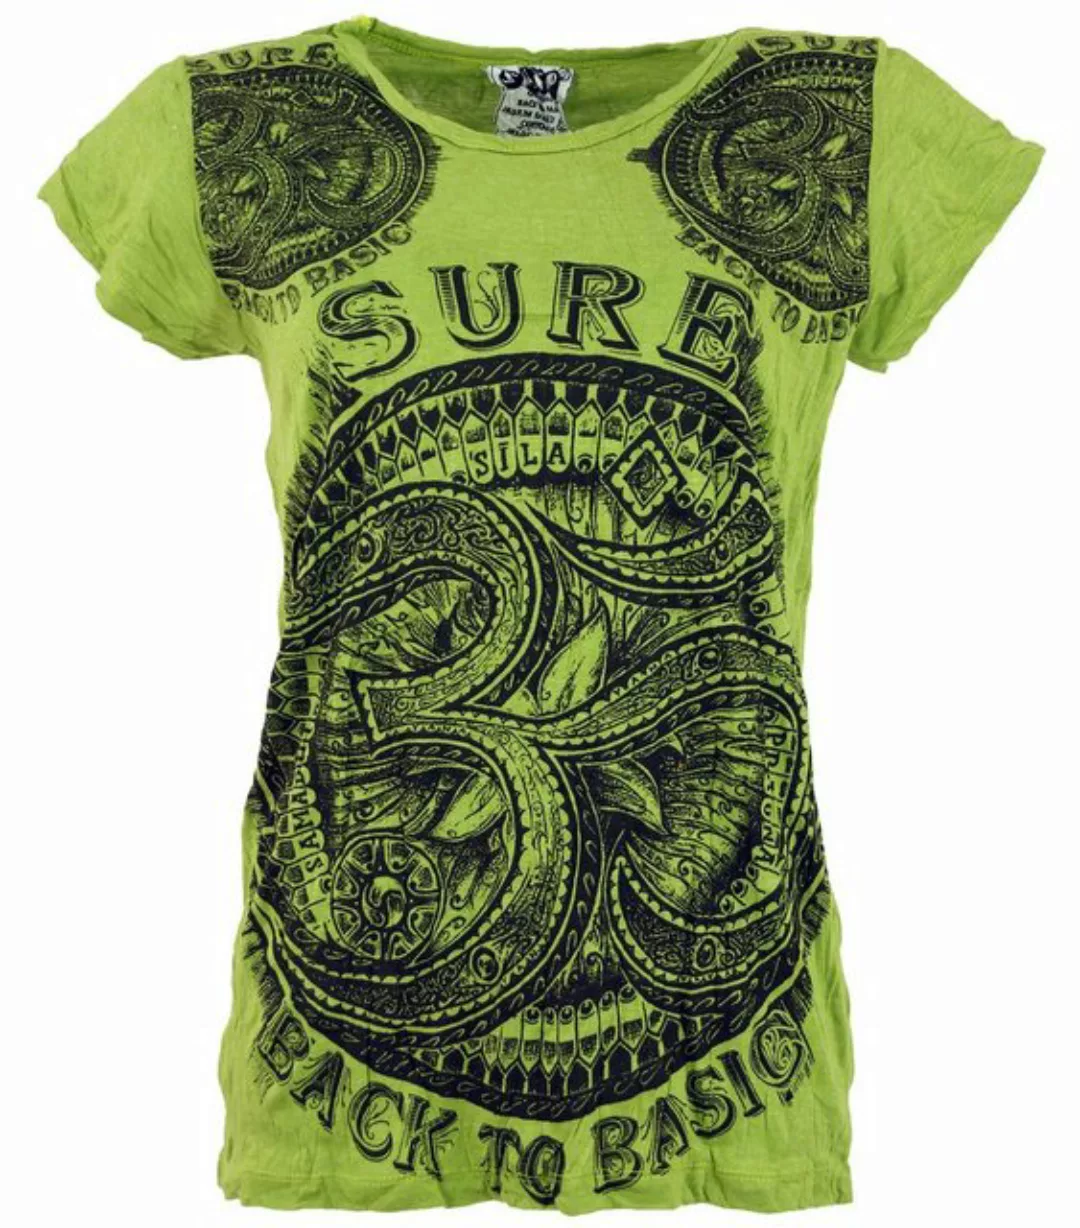 Guru-Shop T-Shirt Sure T-Shirt OM - lemon alternative Bekleidung, Festival, günstig online kaufen